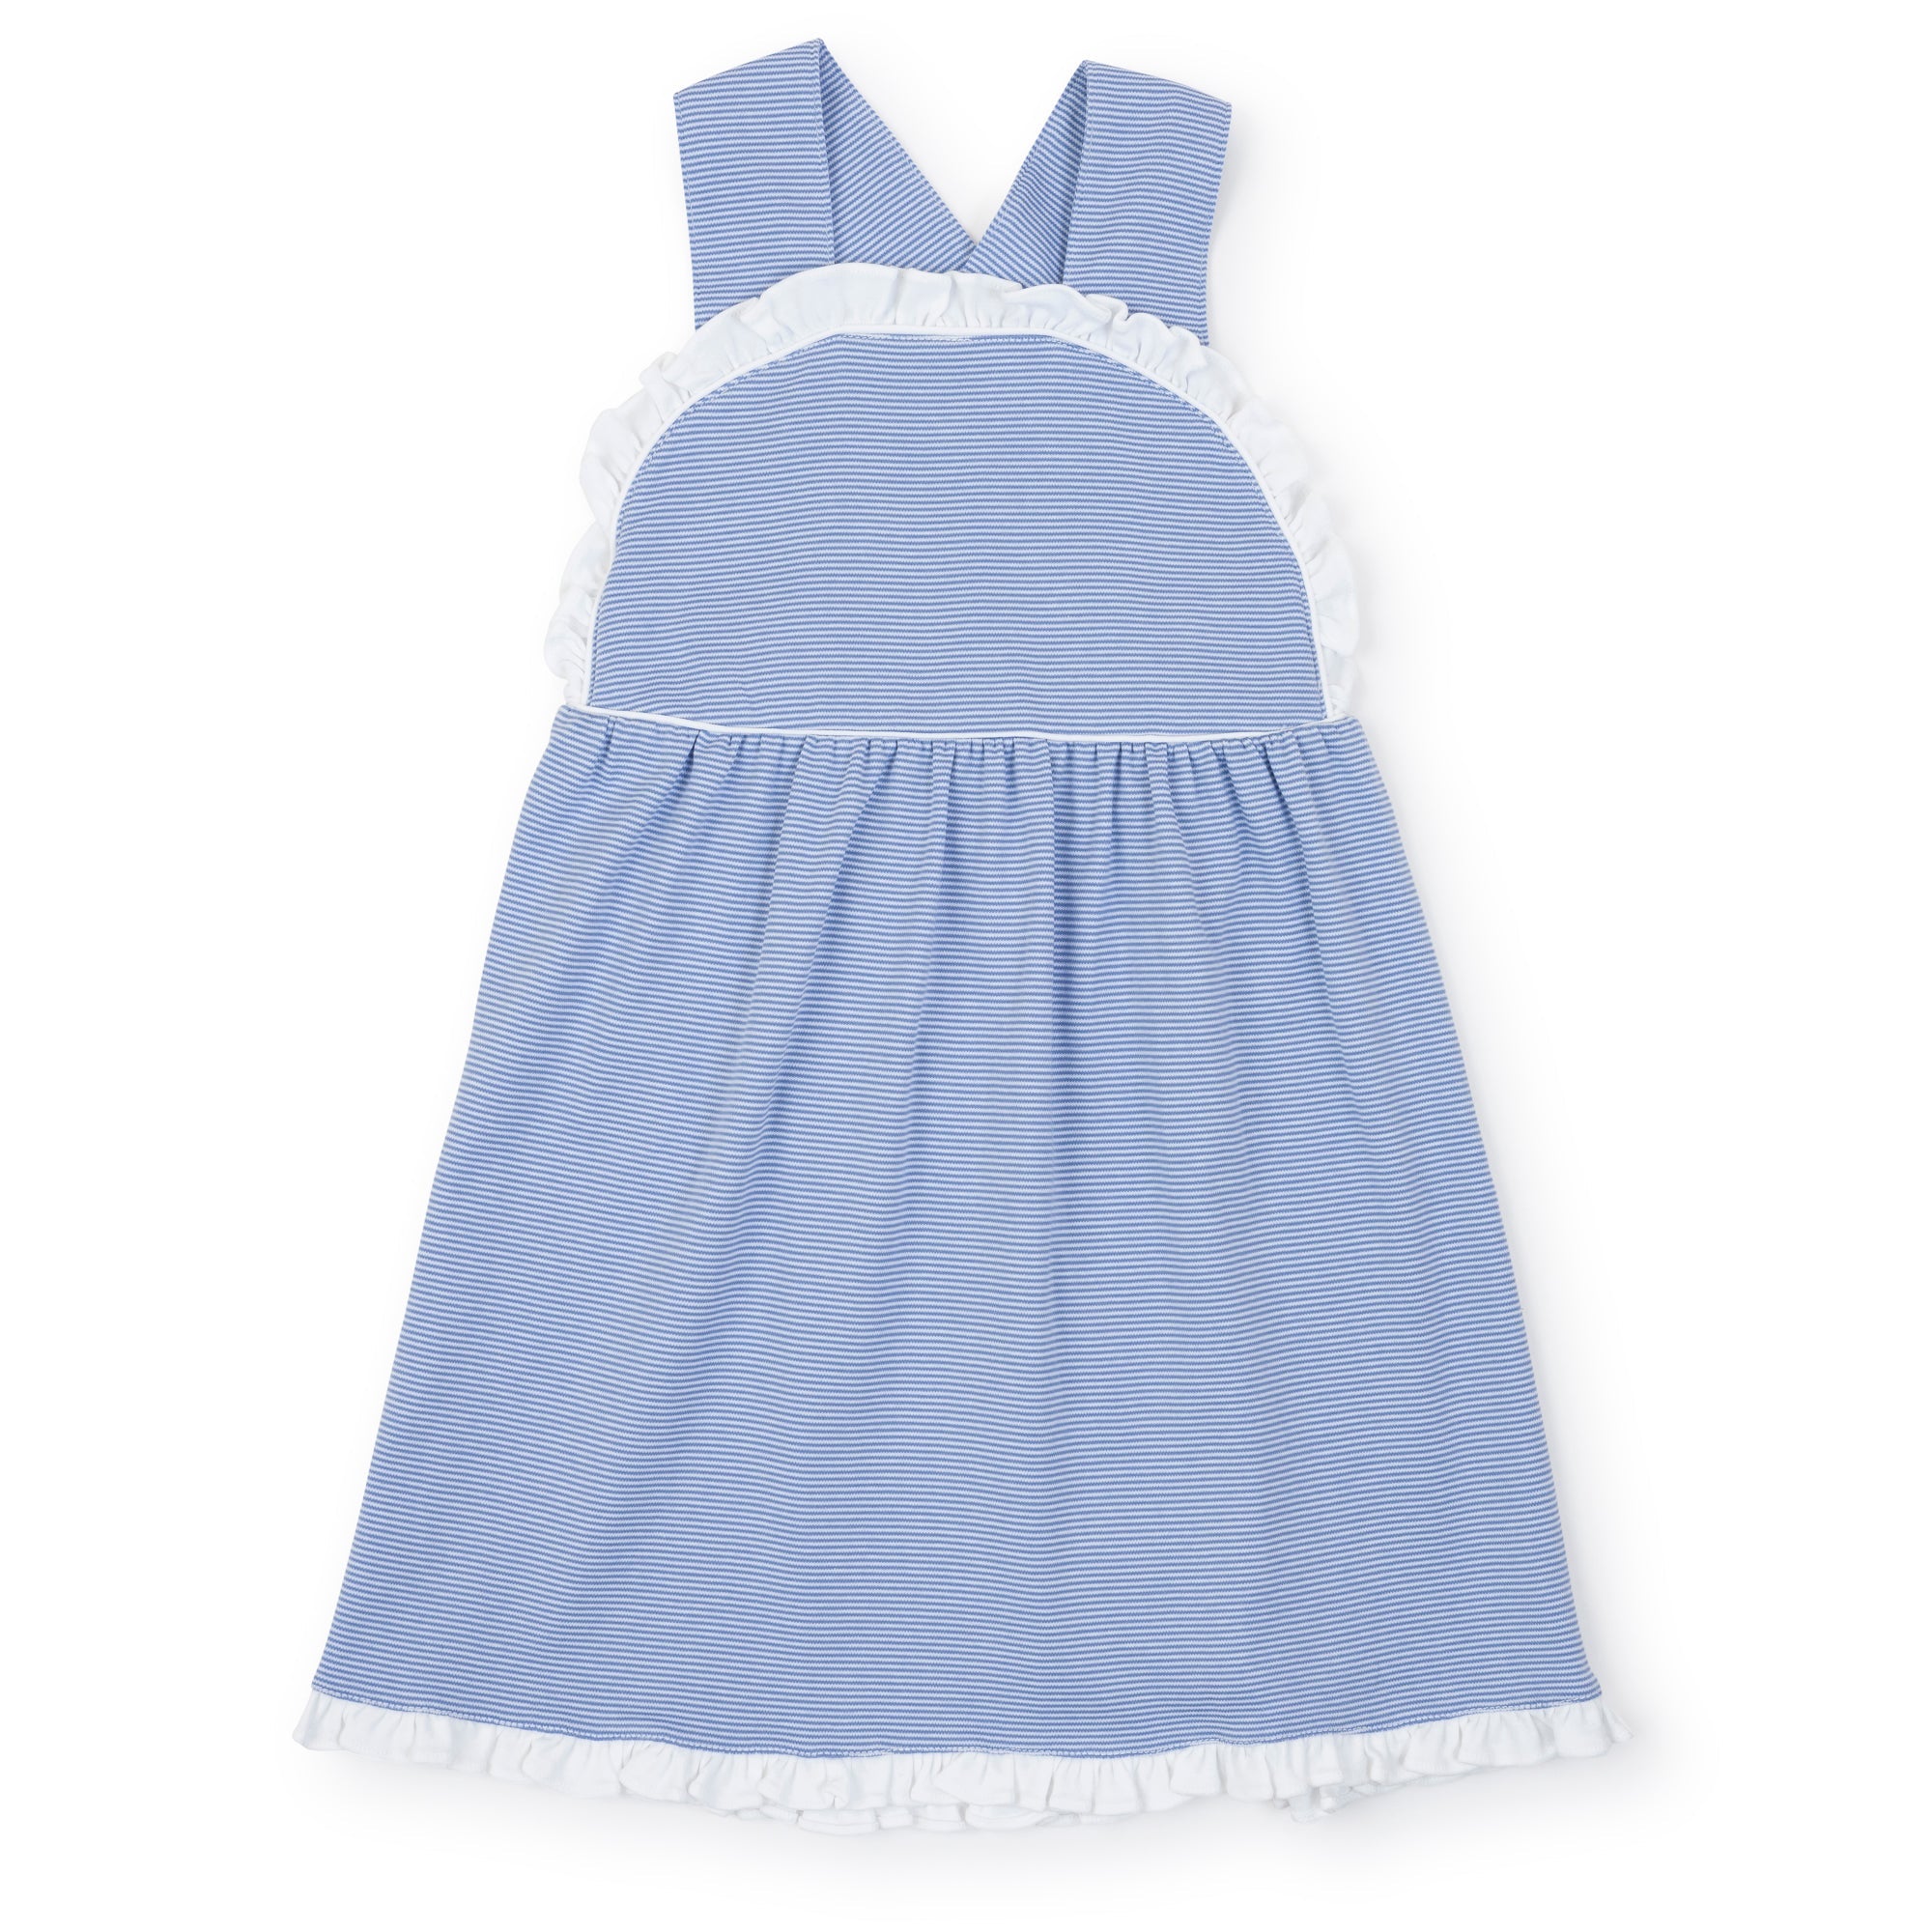 Eden Girls' Pima Cotton Dress - Blue And White Stripes